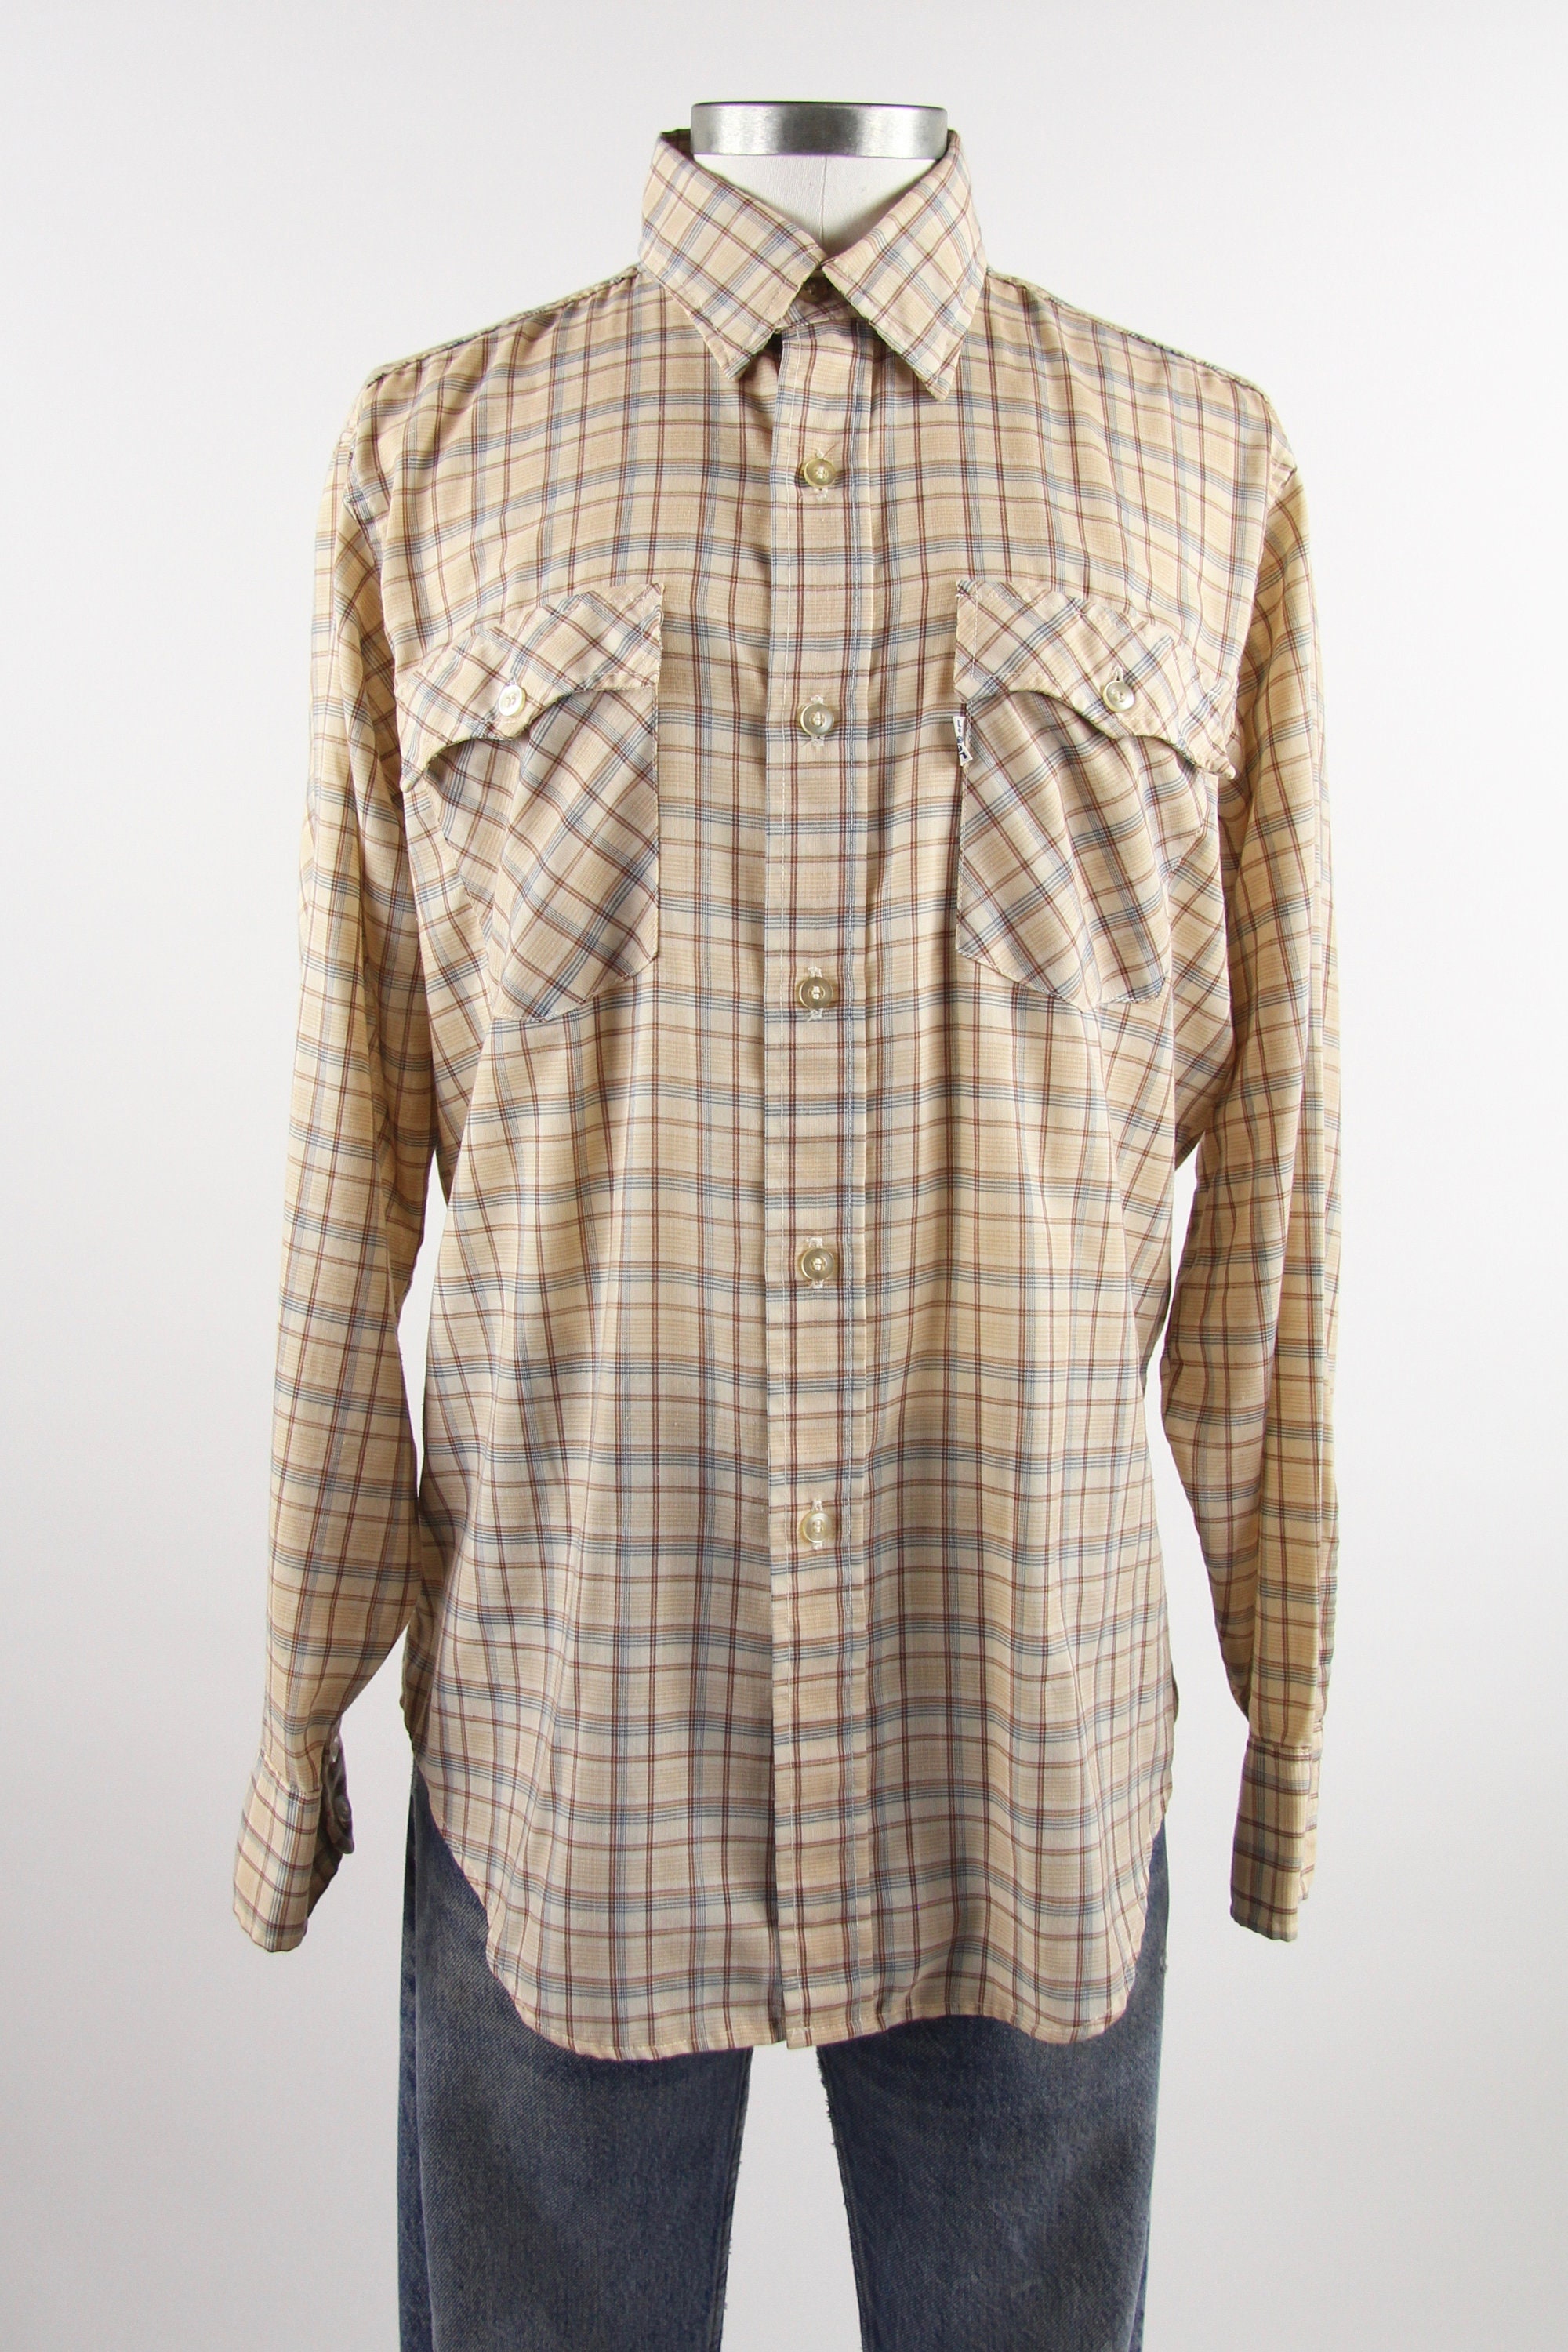 Levi's Plaid Shirt Men's Vintage Button Down Shirt Size Large White Tab ...